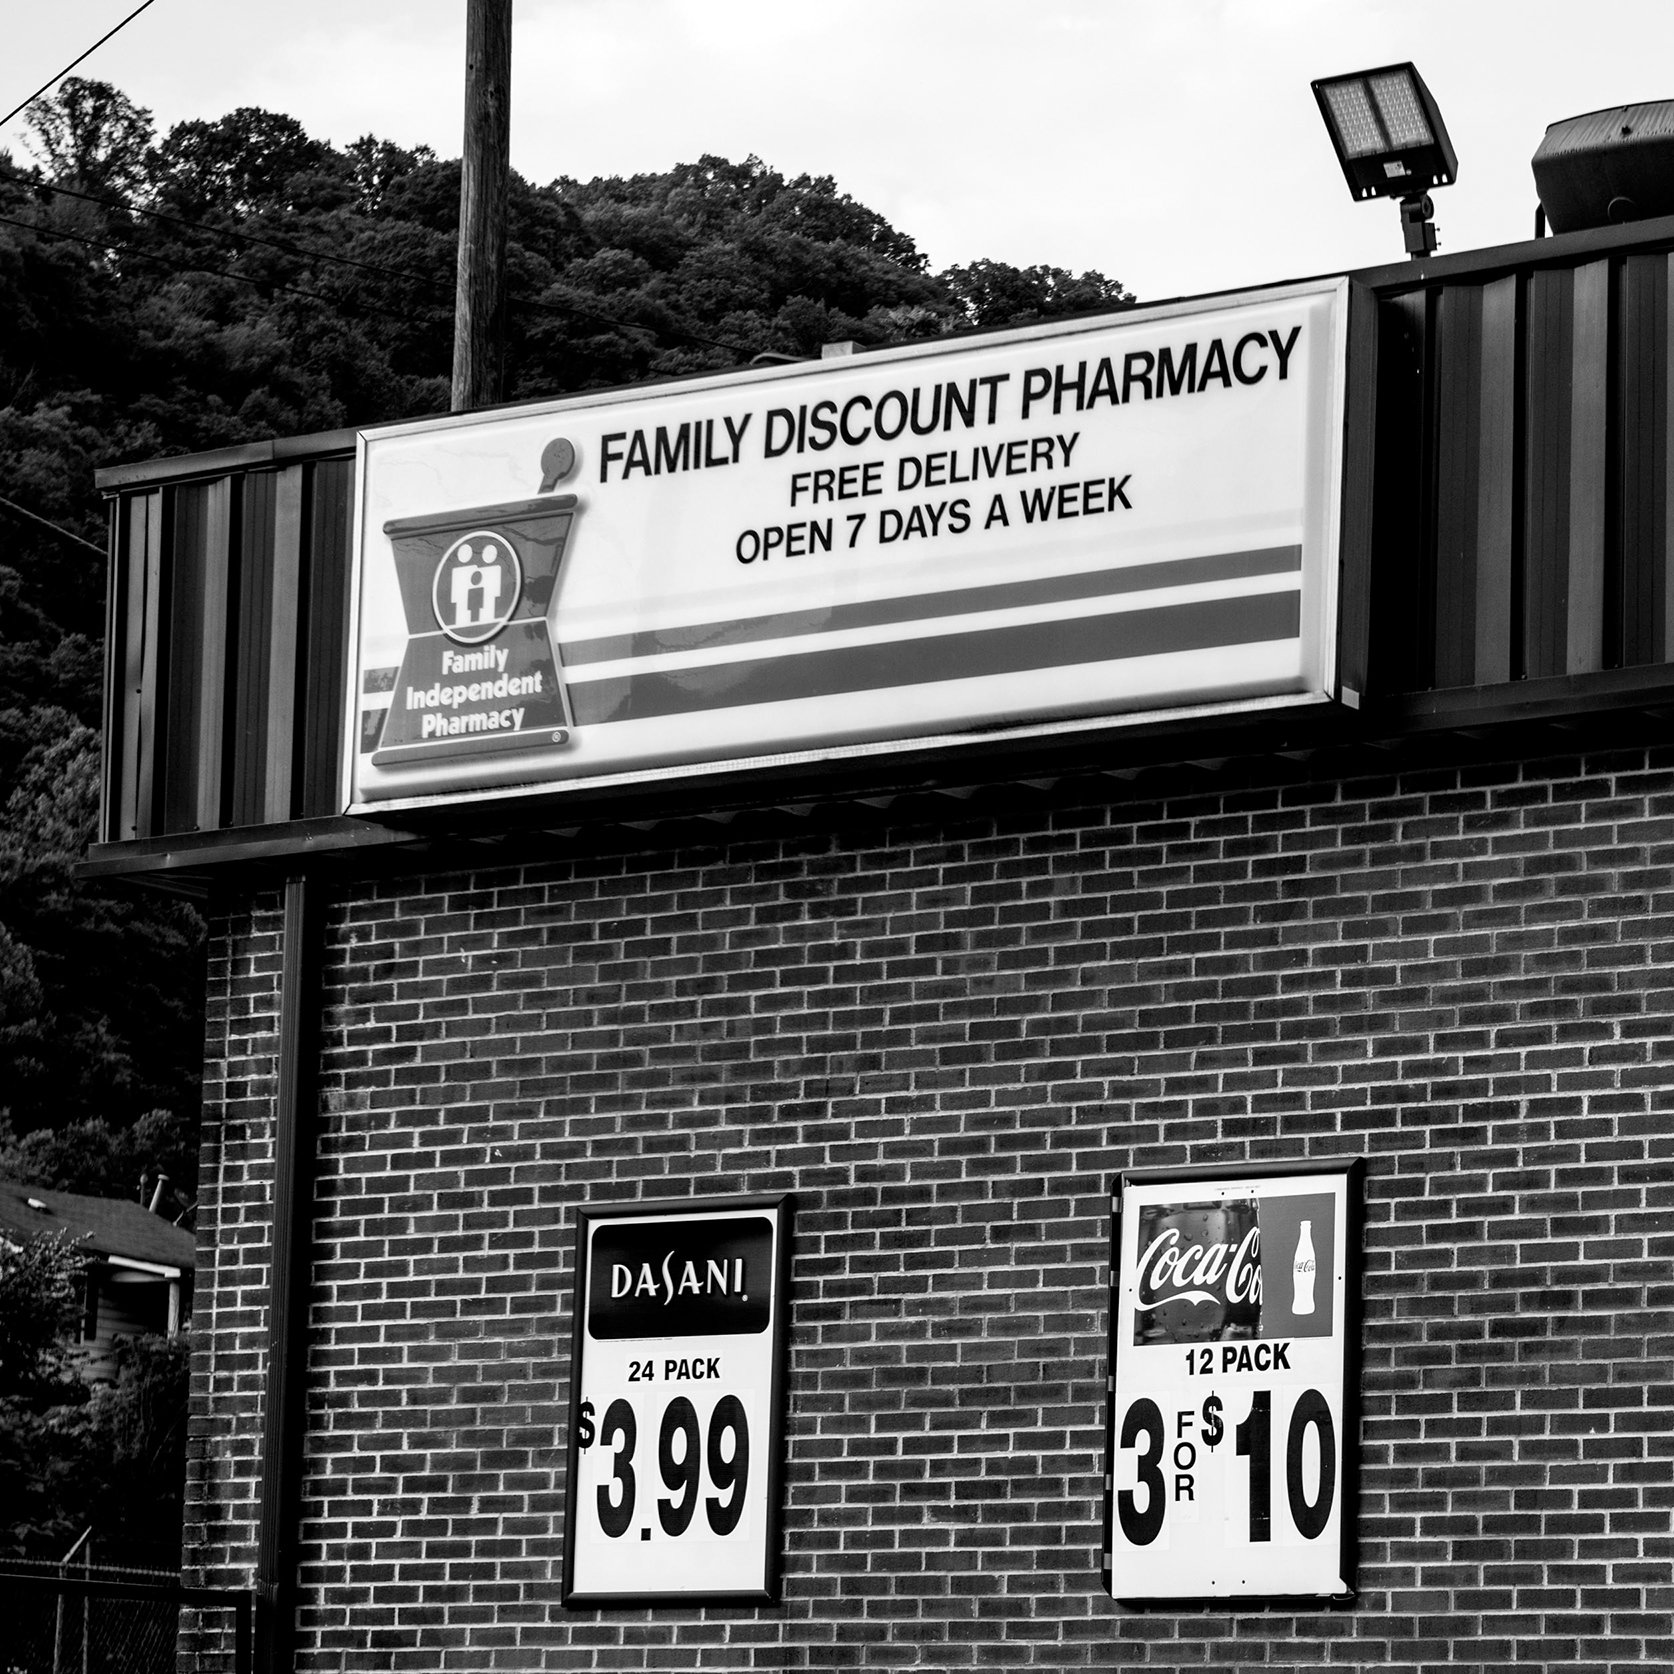 Family discount pharmacy